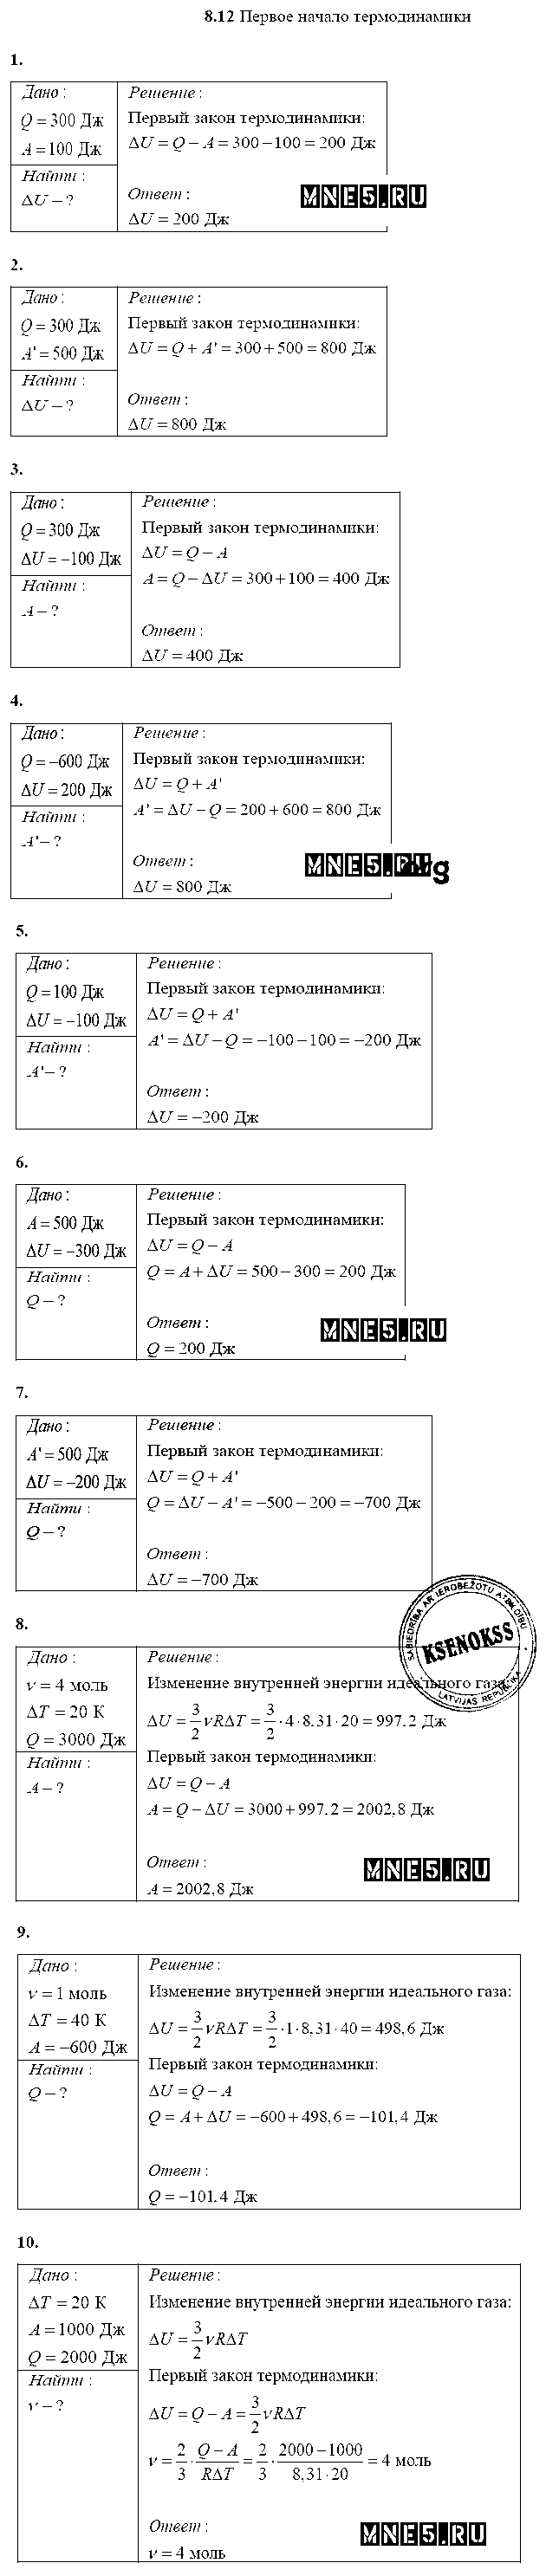 ГДЗ Физика 10 класс - 8.12. Первое начало термодинамики